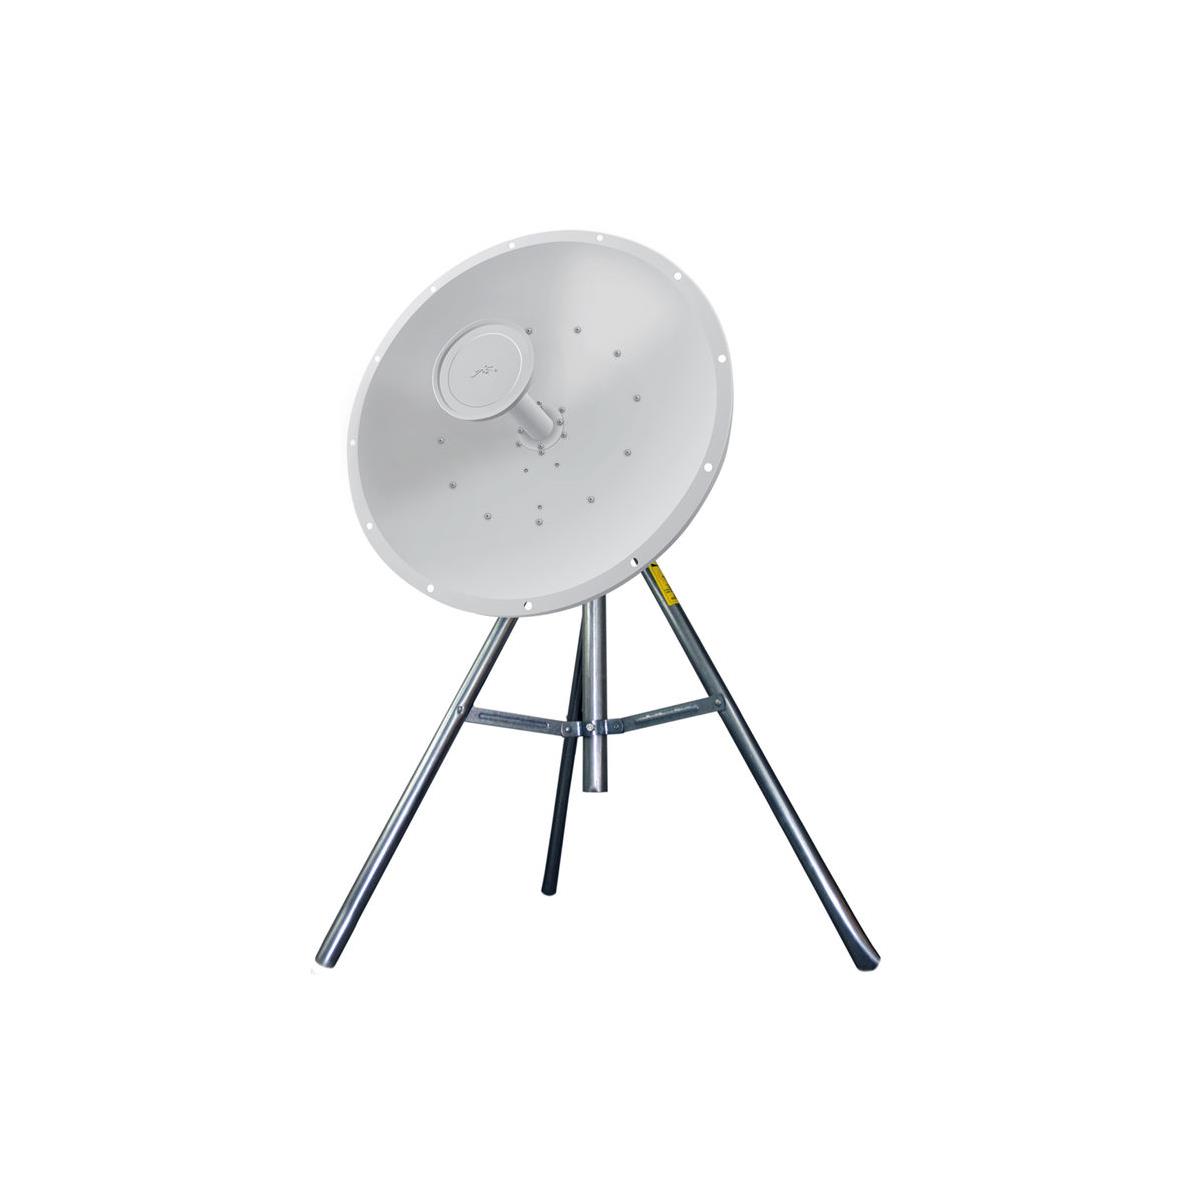 Image of Ubiquiti Networks 5GHz Rocket Dish airMAX 2x2 PtP Bridge Dish Antenna